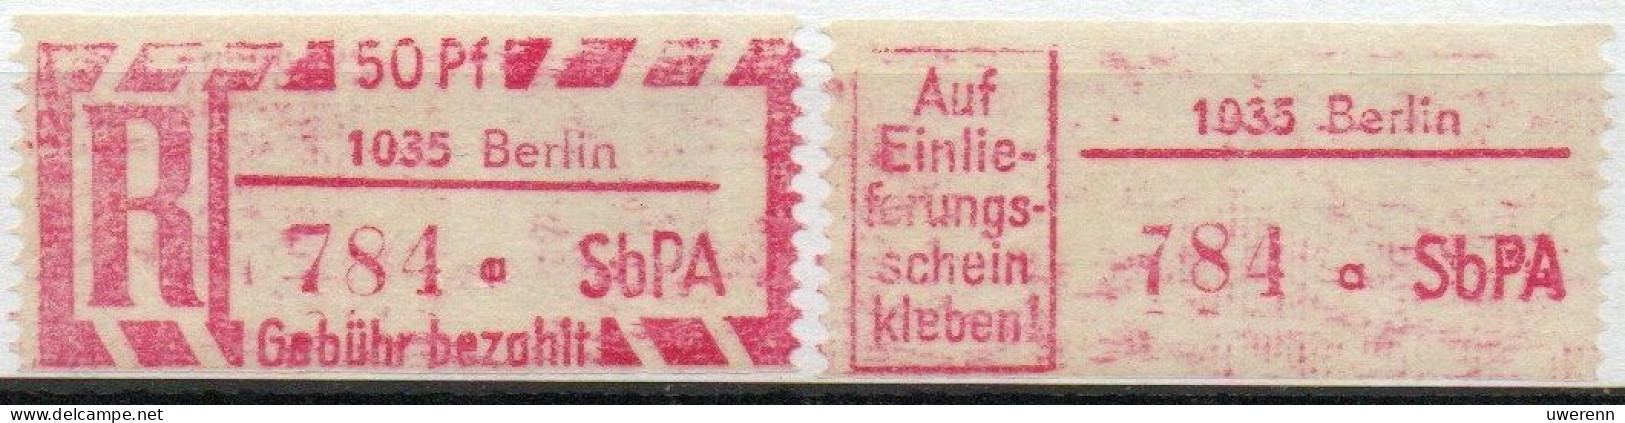 DDR Einschreibemarke Berlin SbPA Postfrisch, EM2B-1035aI Gt - R-Zettel